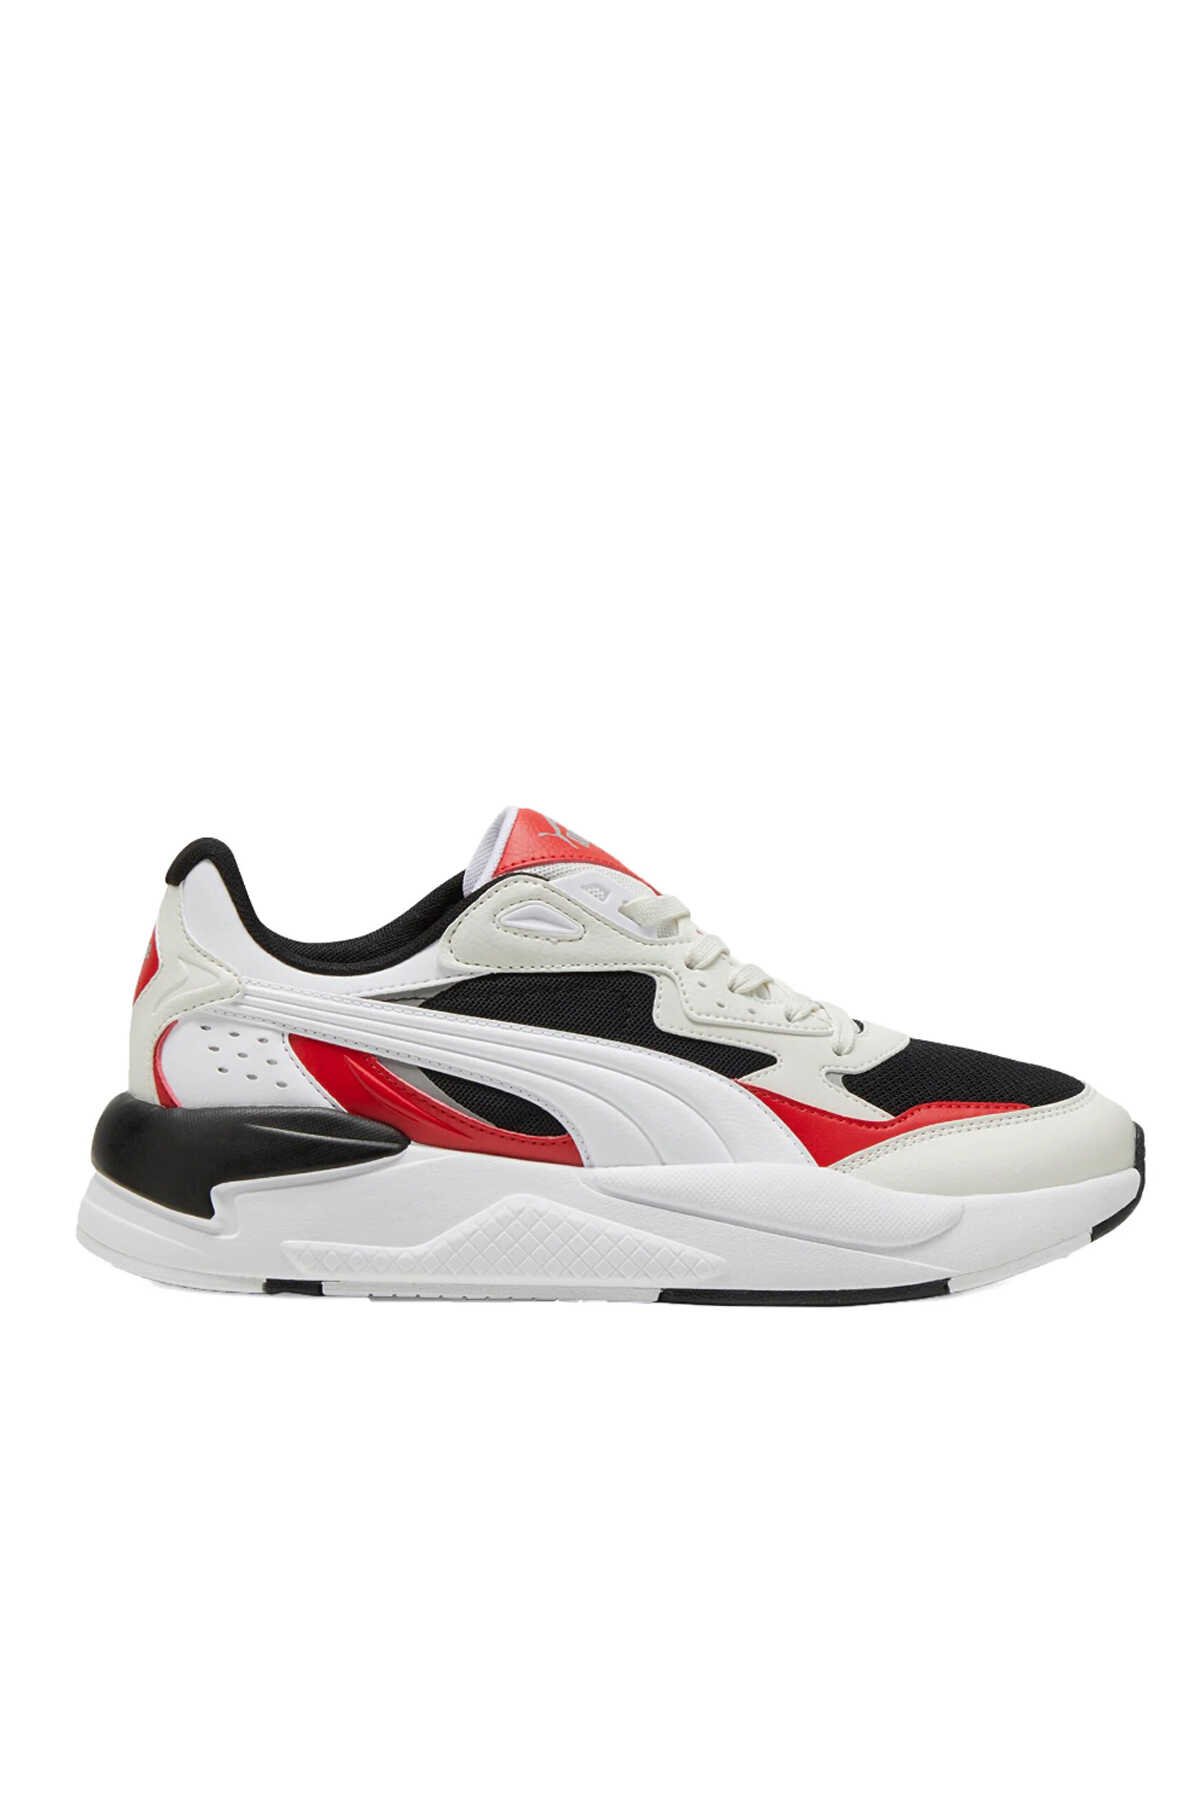 Puma - Puma X-Ray Speed Unisex Sneaker Ayakkabı Beyaz / Kırmızı